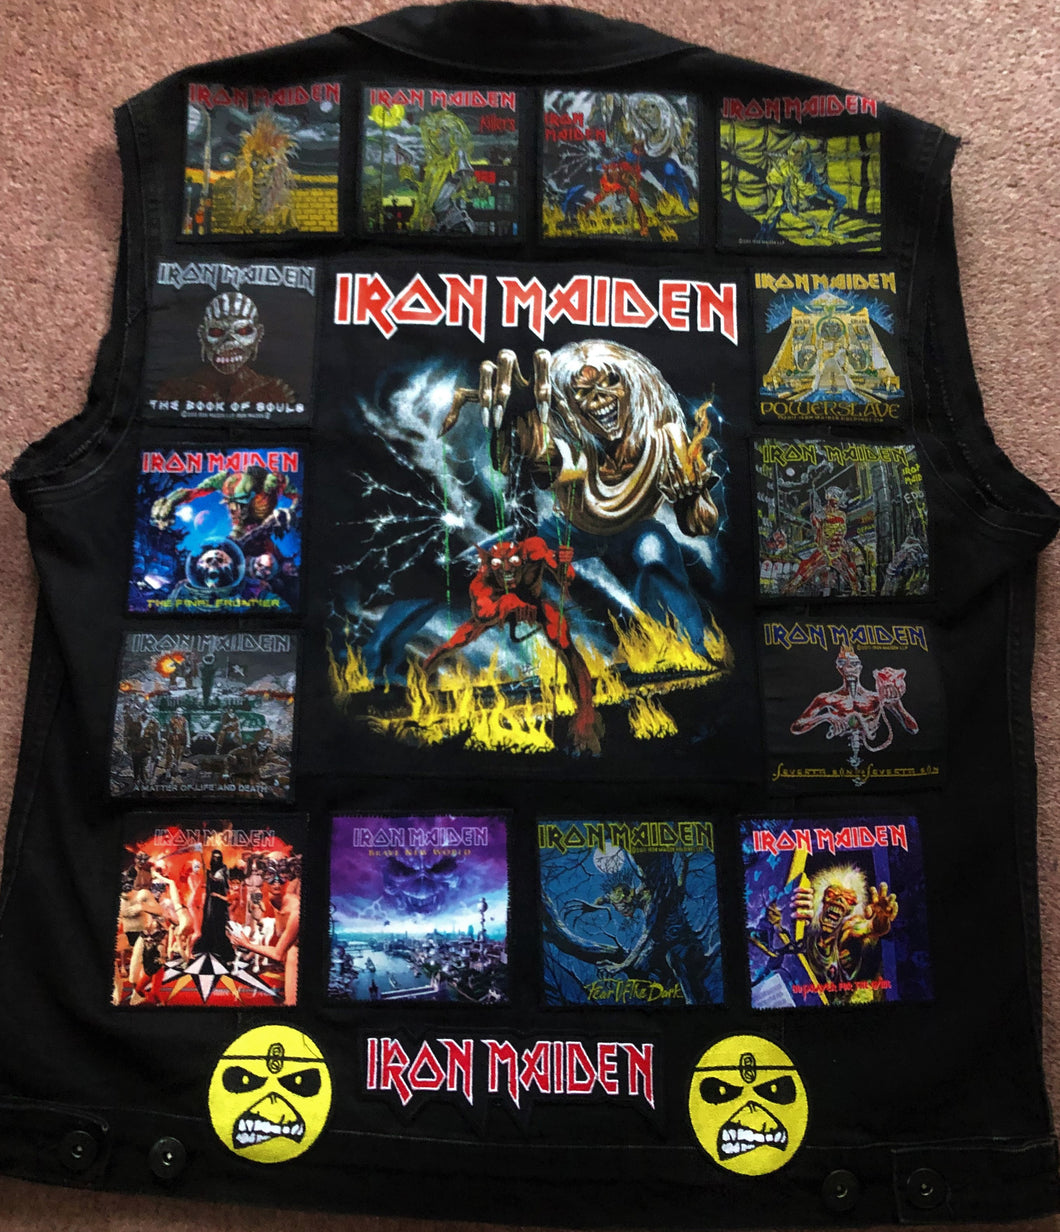 Fully Laden Iron Maiden: Trooper Black Ops Edition Patch Denim Cut-Off Battle Jacket